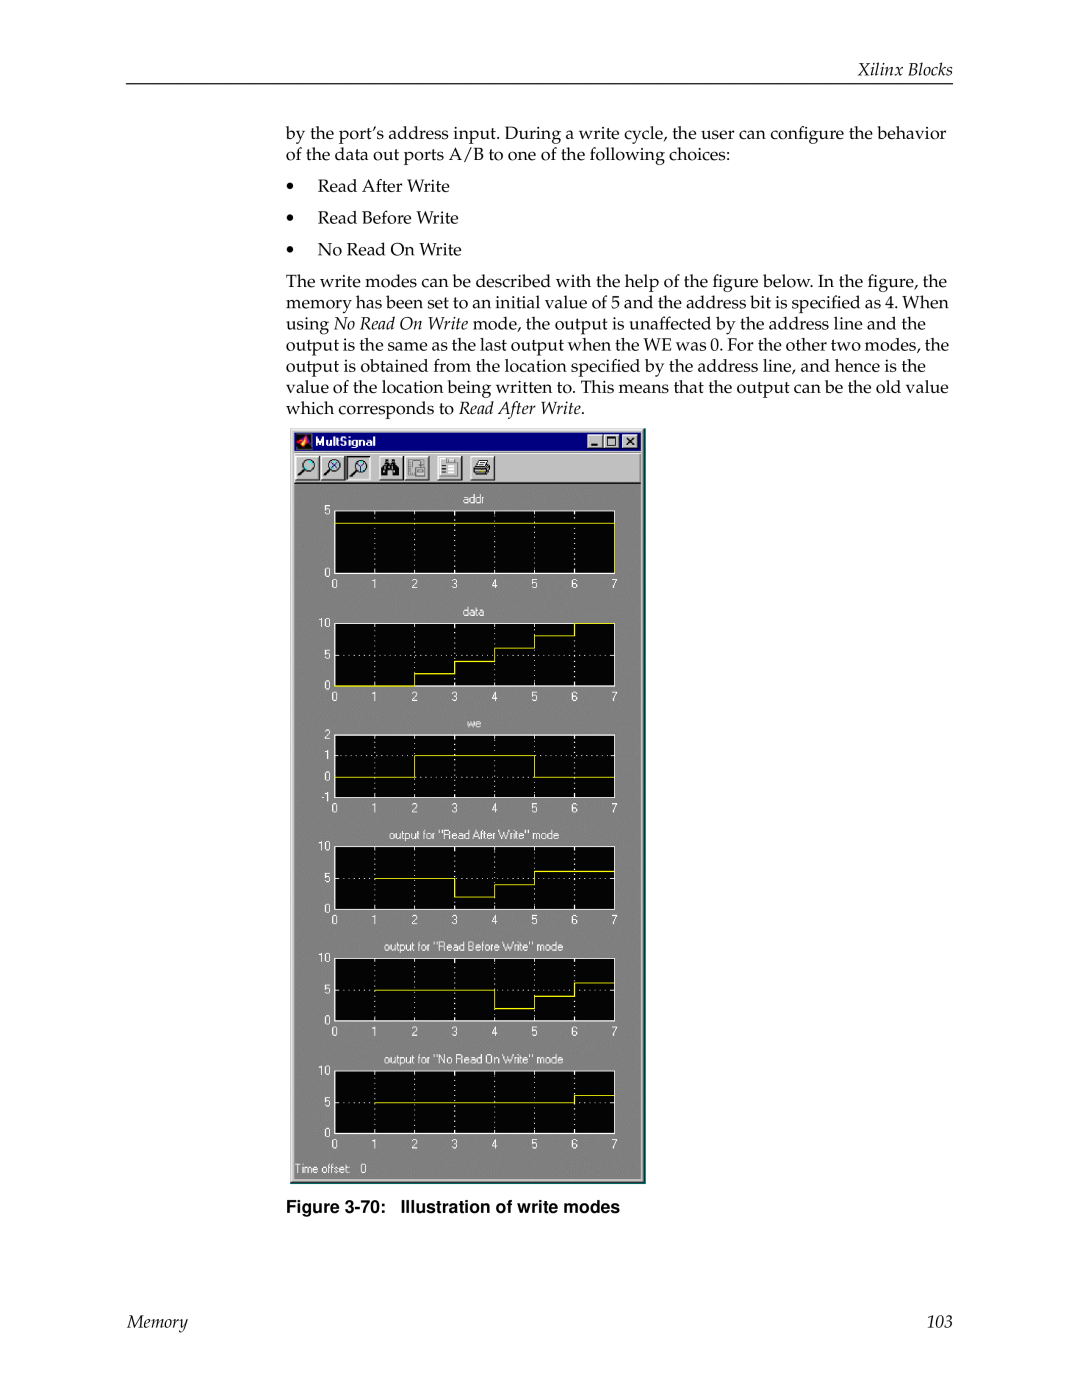 Xilinx V2.1 manual Memory, Xilinx Blocks, 70:Illustration of write modes 